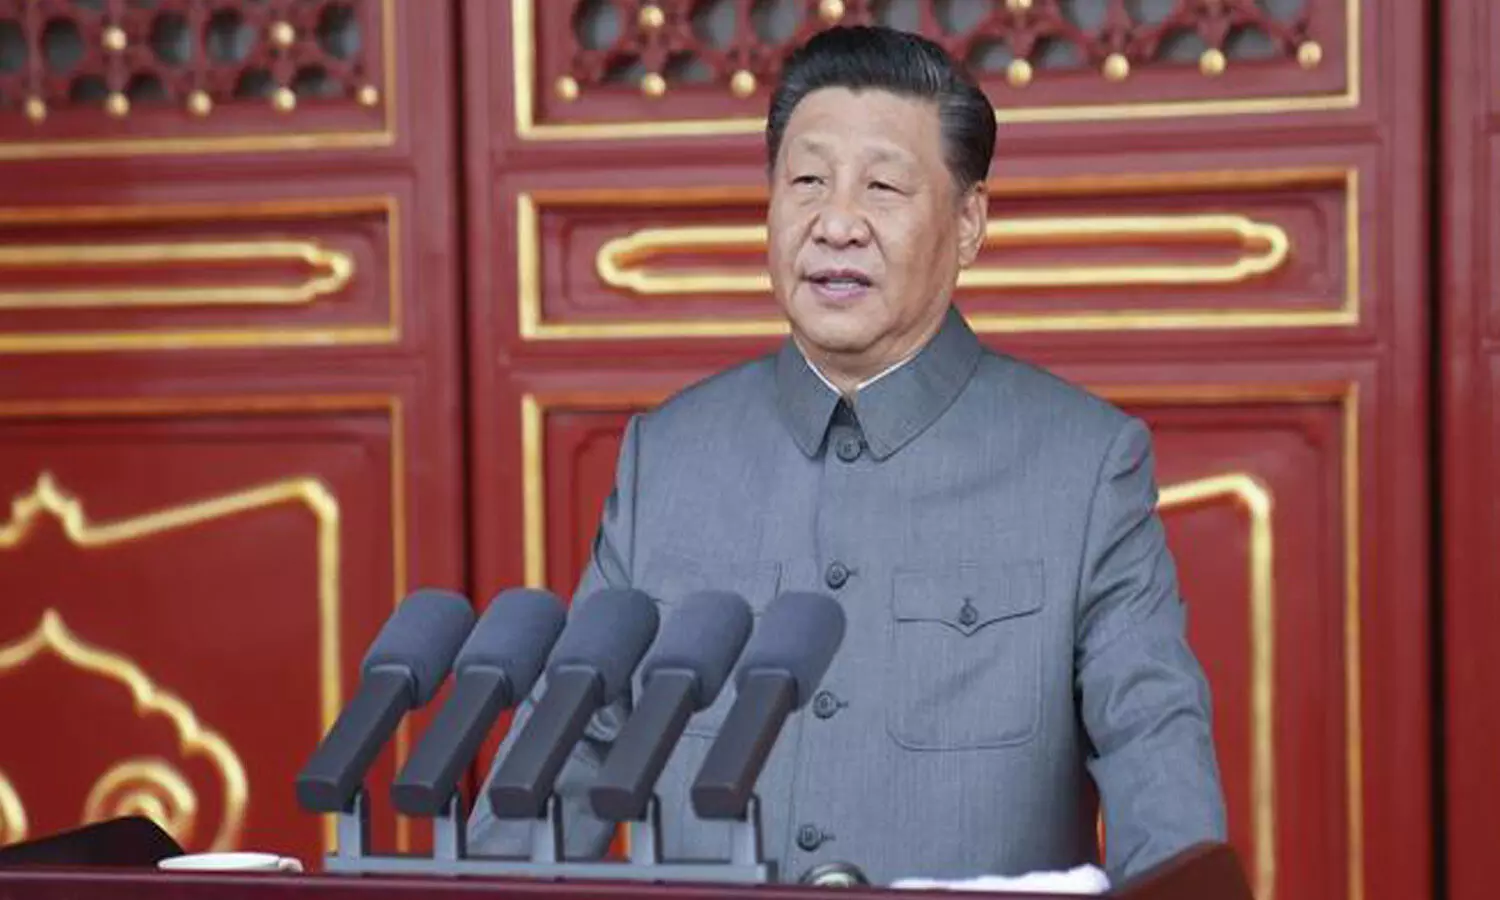 Stop doing Politics & blame game on origin of Coronavirus: Xi Jinping